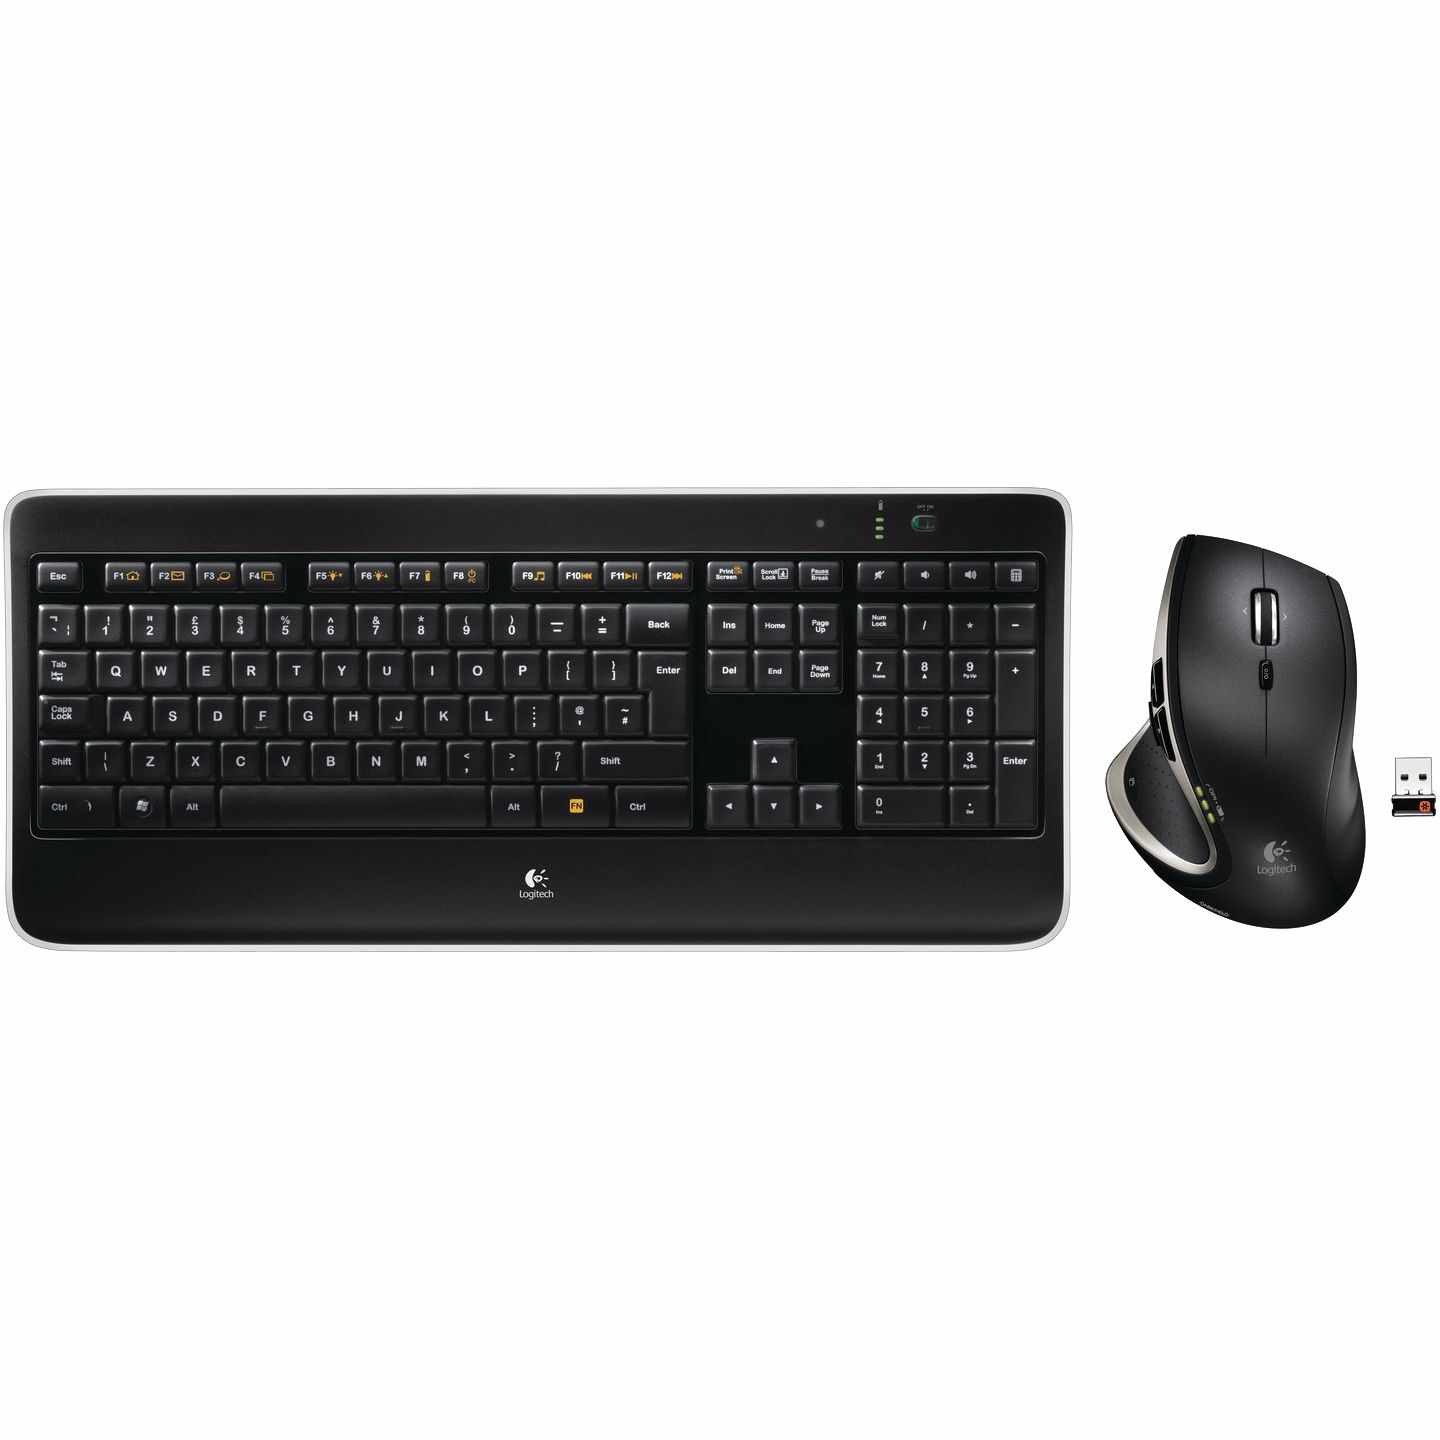 Kit tastatura + mouse Logitech MX800, Wireless, Negru